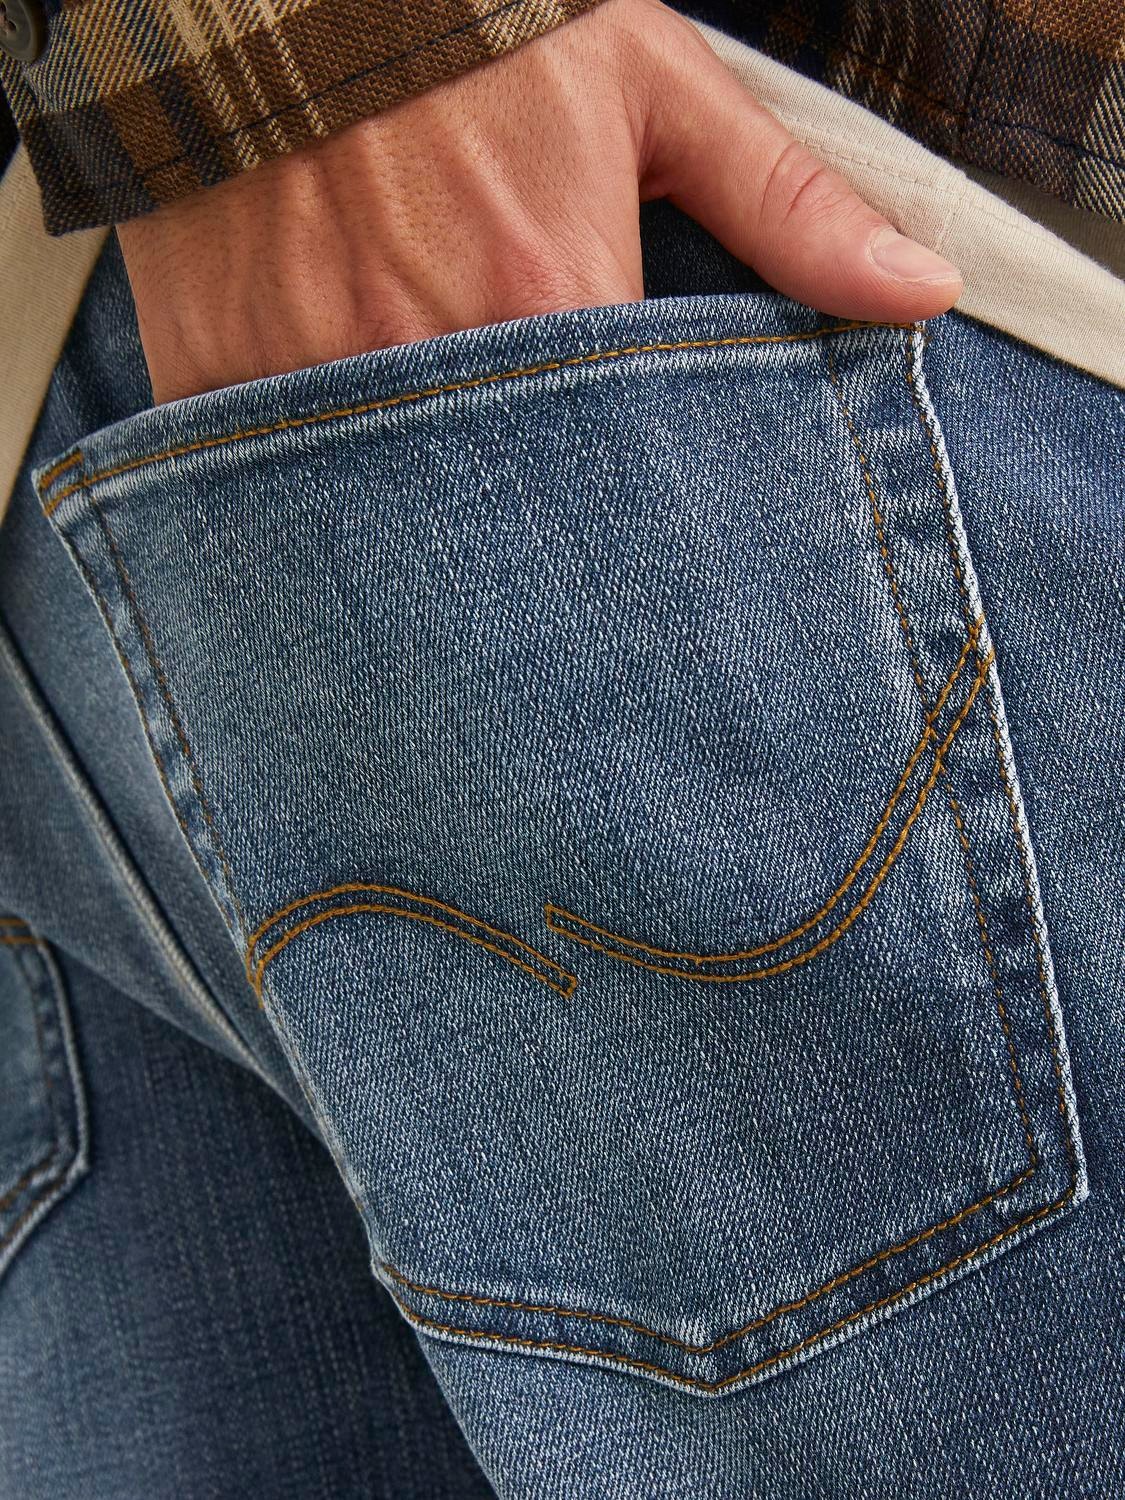 JJIERIK JJORIGINAL GE 410 SN Tapered fit jeans, Medium Blue